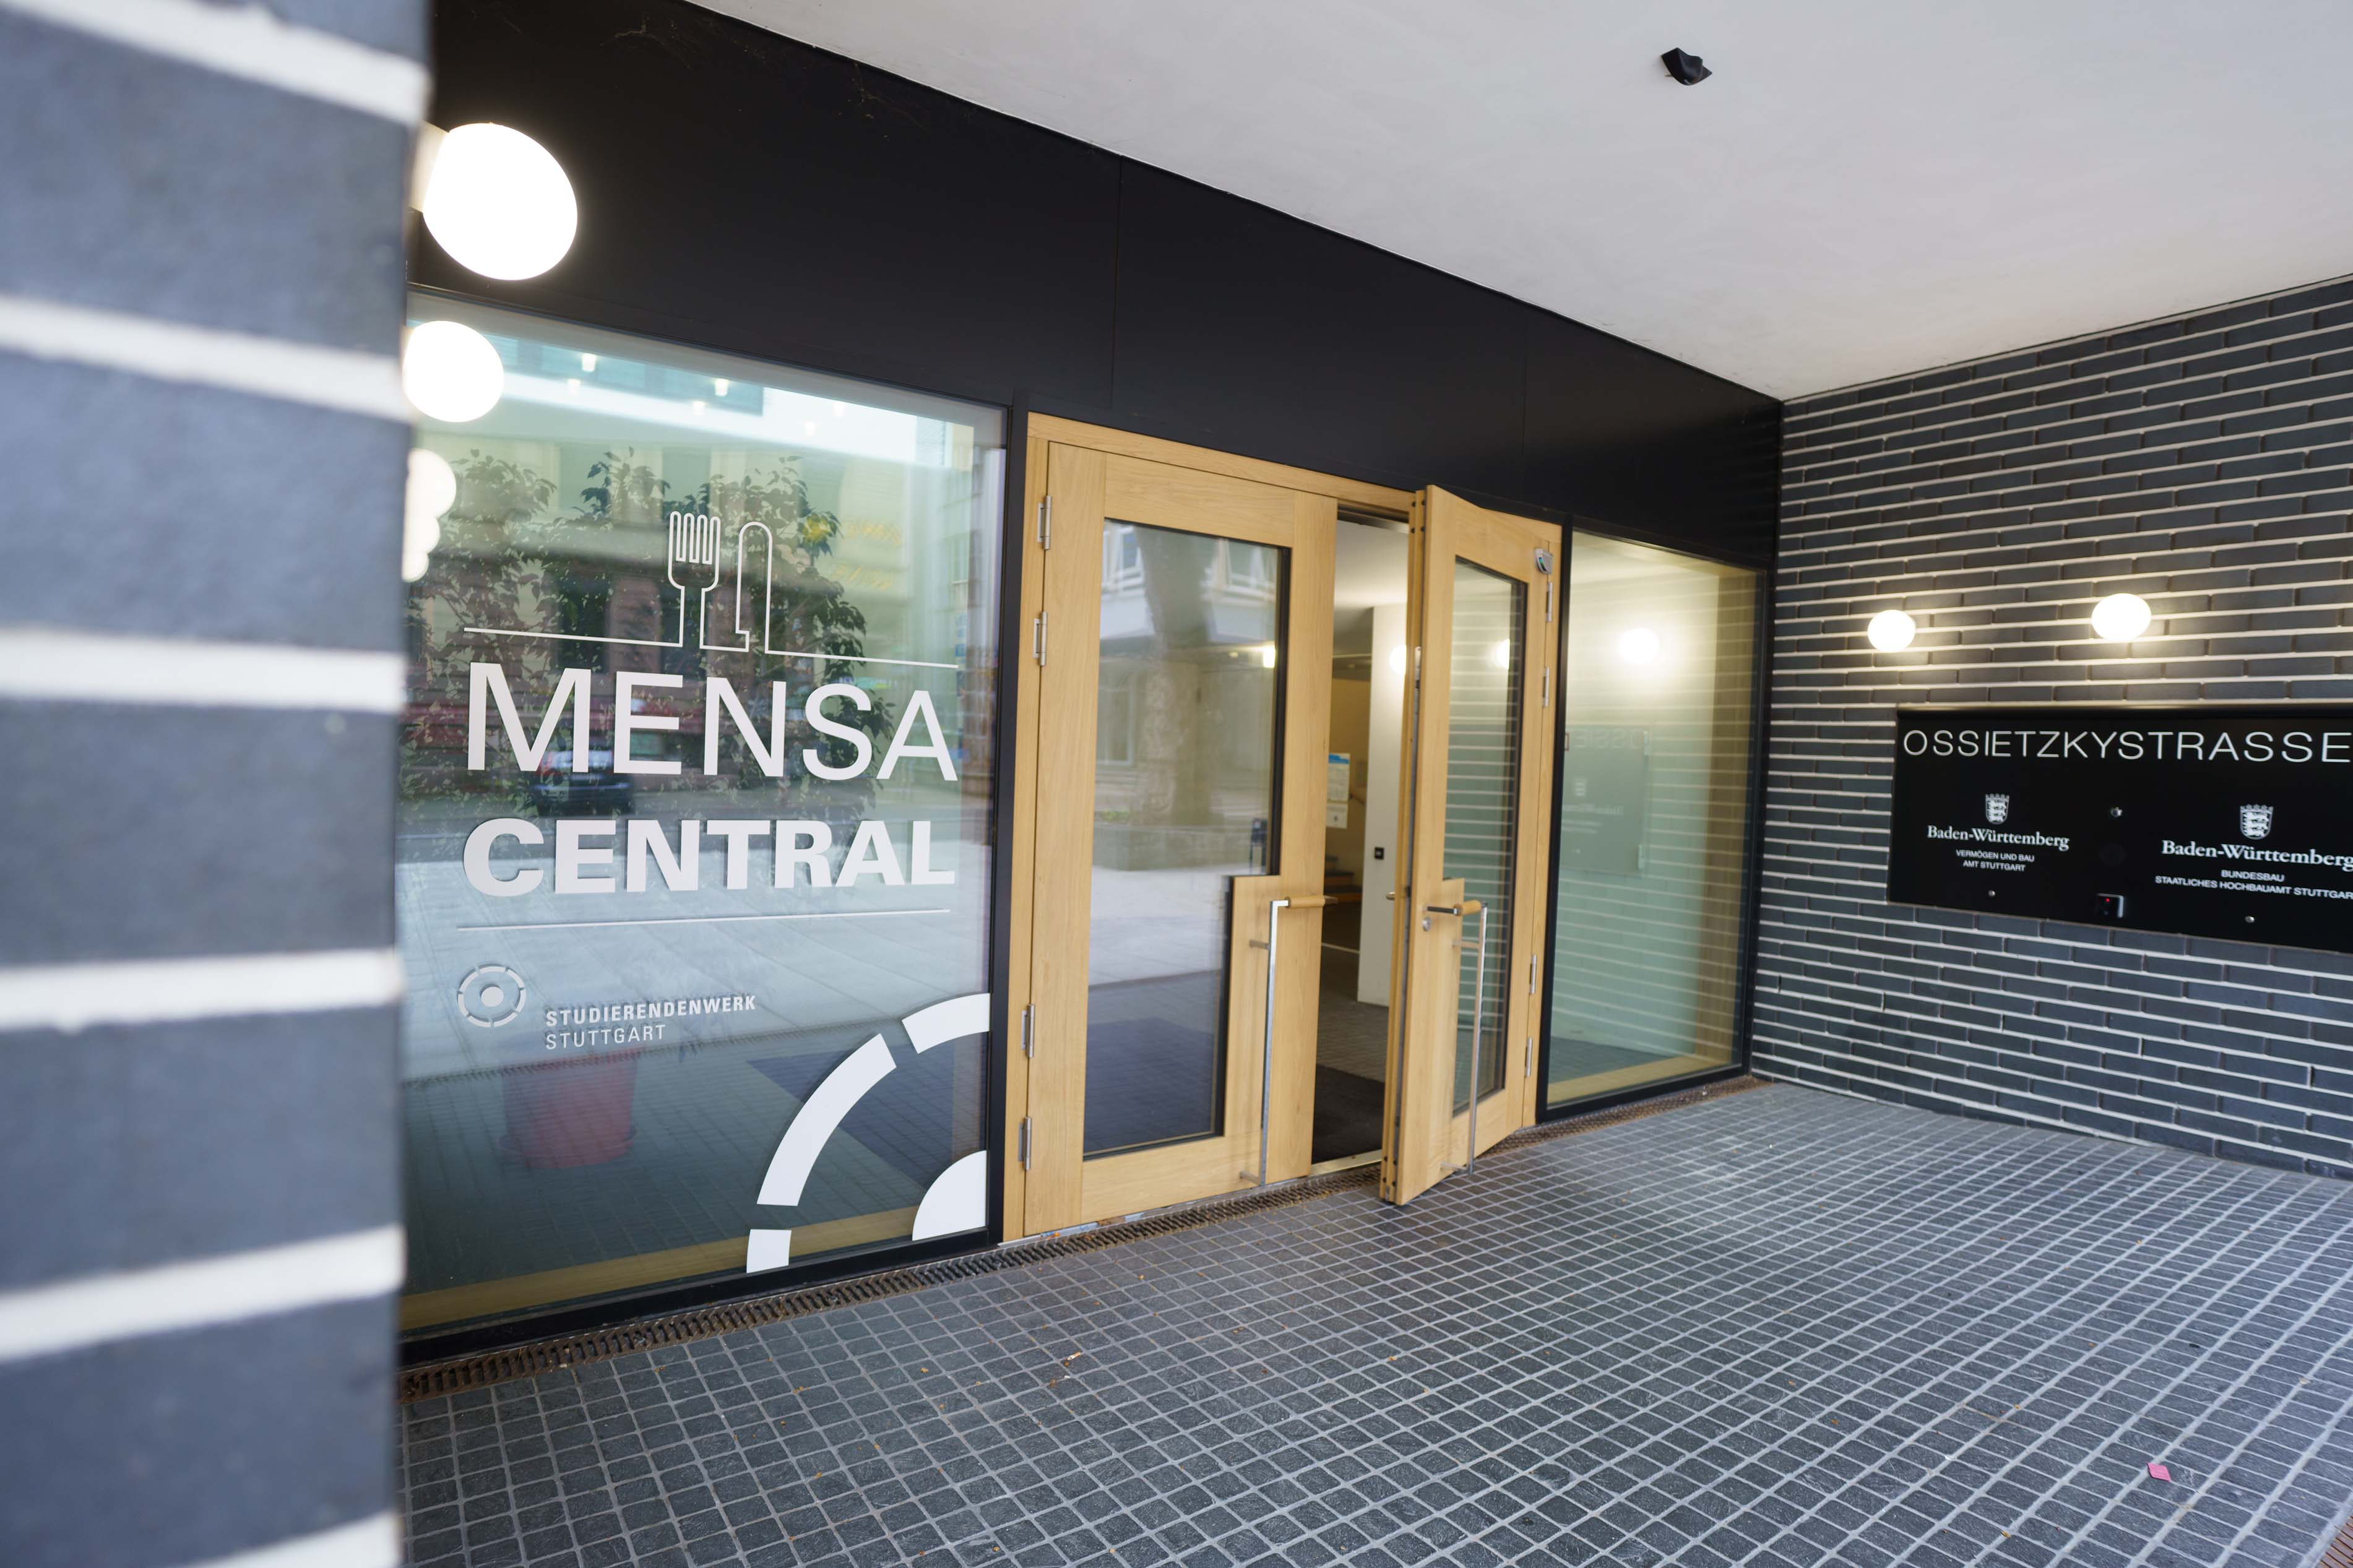 Entrance door to the Mensa Central